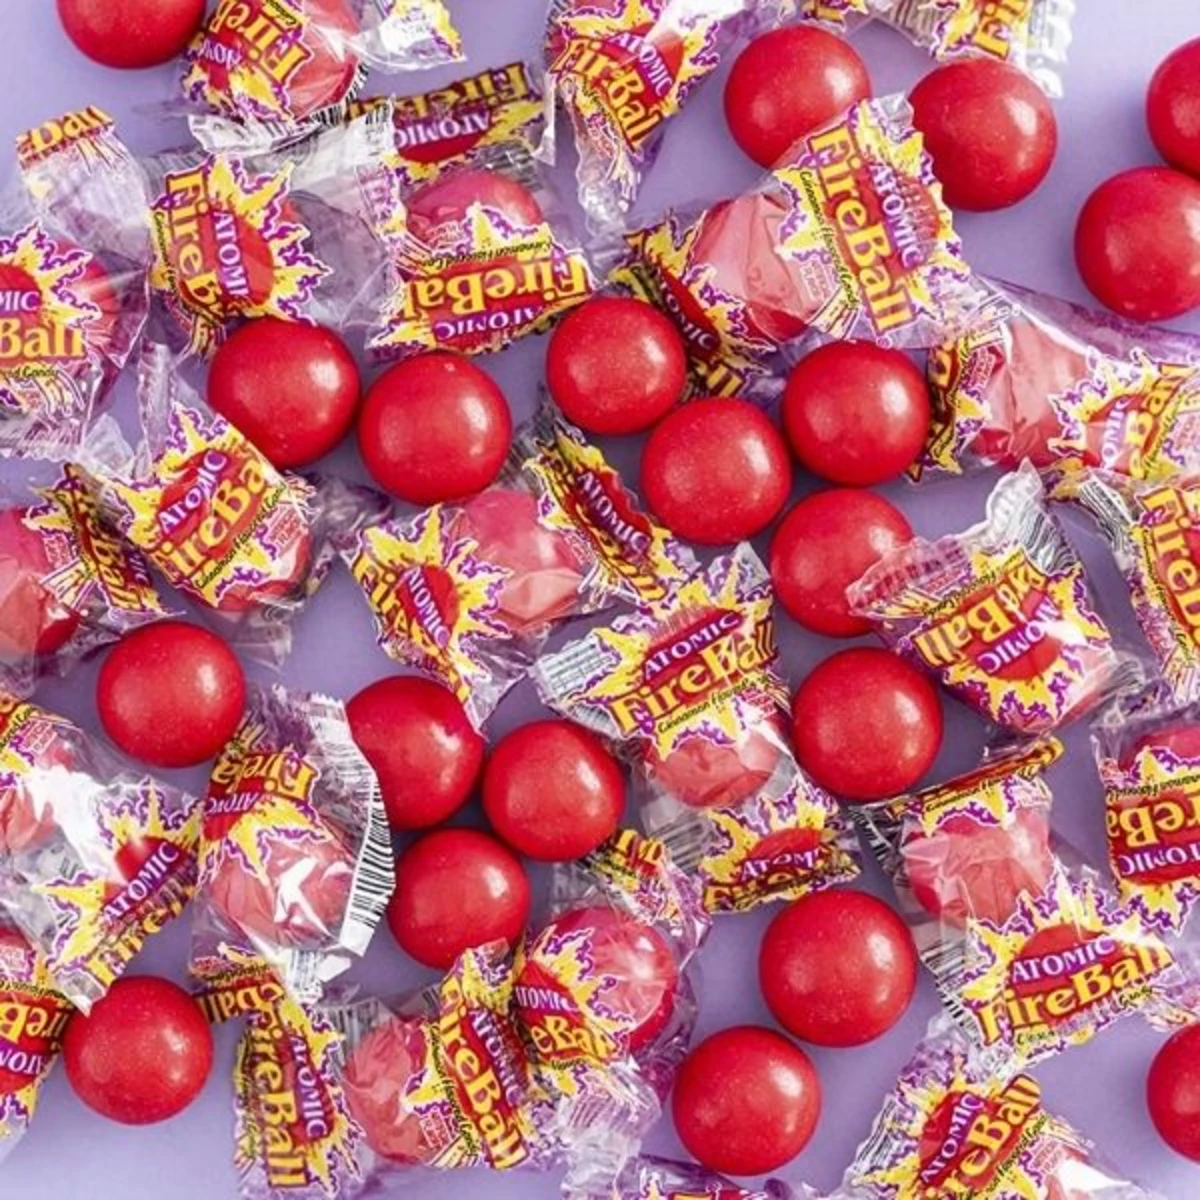 Atomic Fireball Ferarra Candy Company ?w=1200&h=0&zc=1&s=0&a=t&q=89